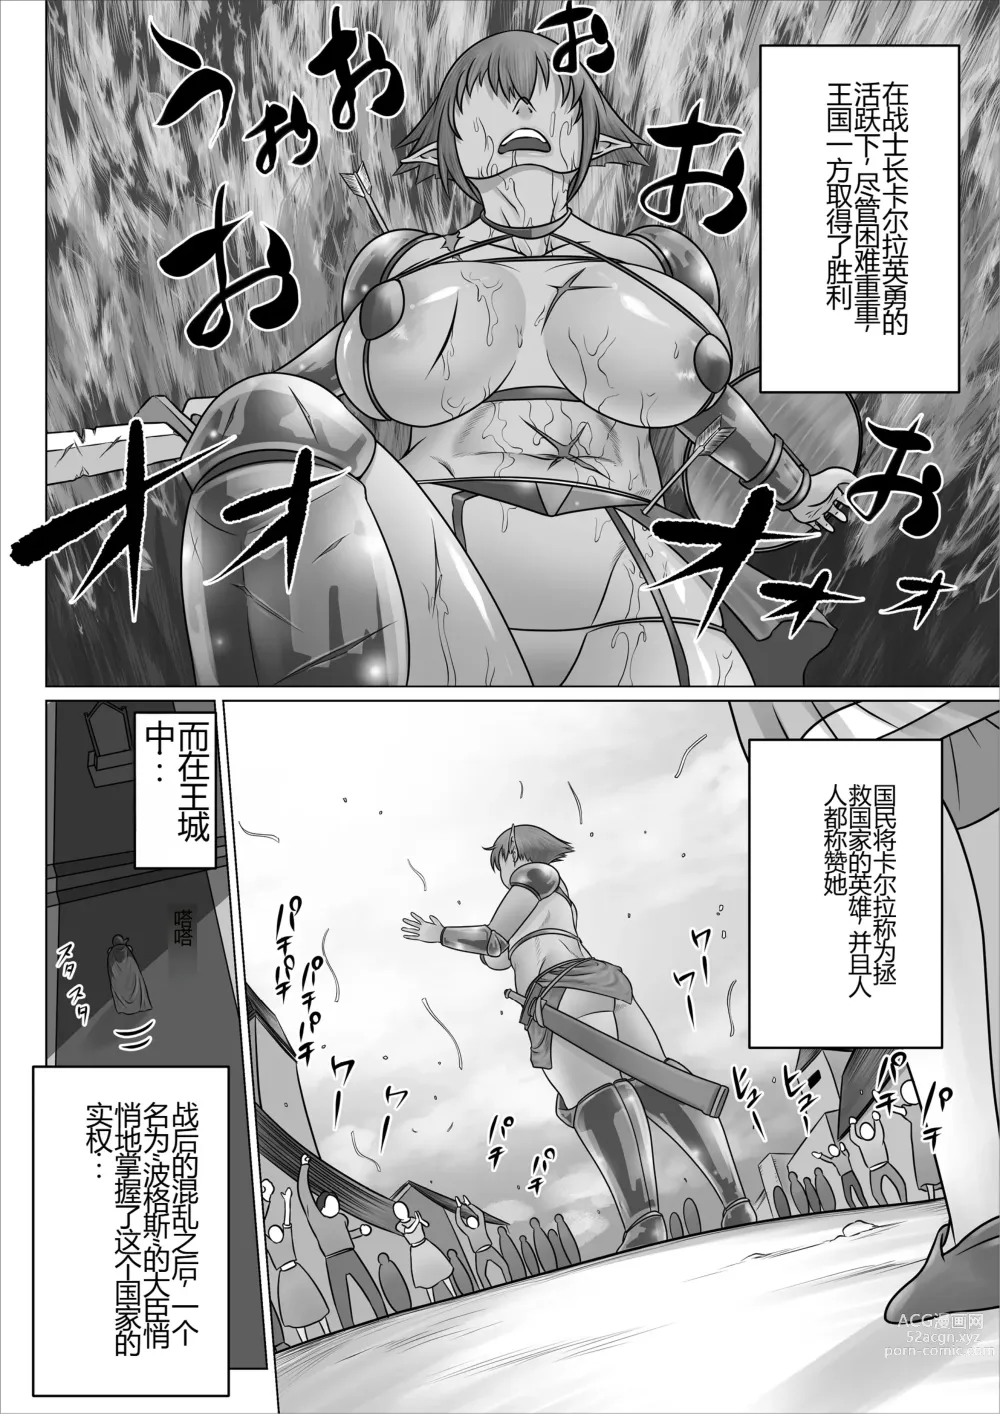 Page 5 of doujinshi 被誉为英雄的女战士长艾尔拉被改造成淫乱的母猪成为一生奉献做为配种精液便器的故事